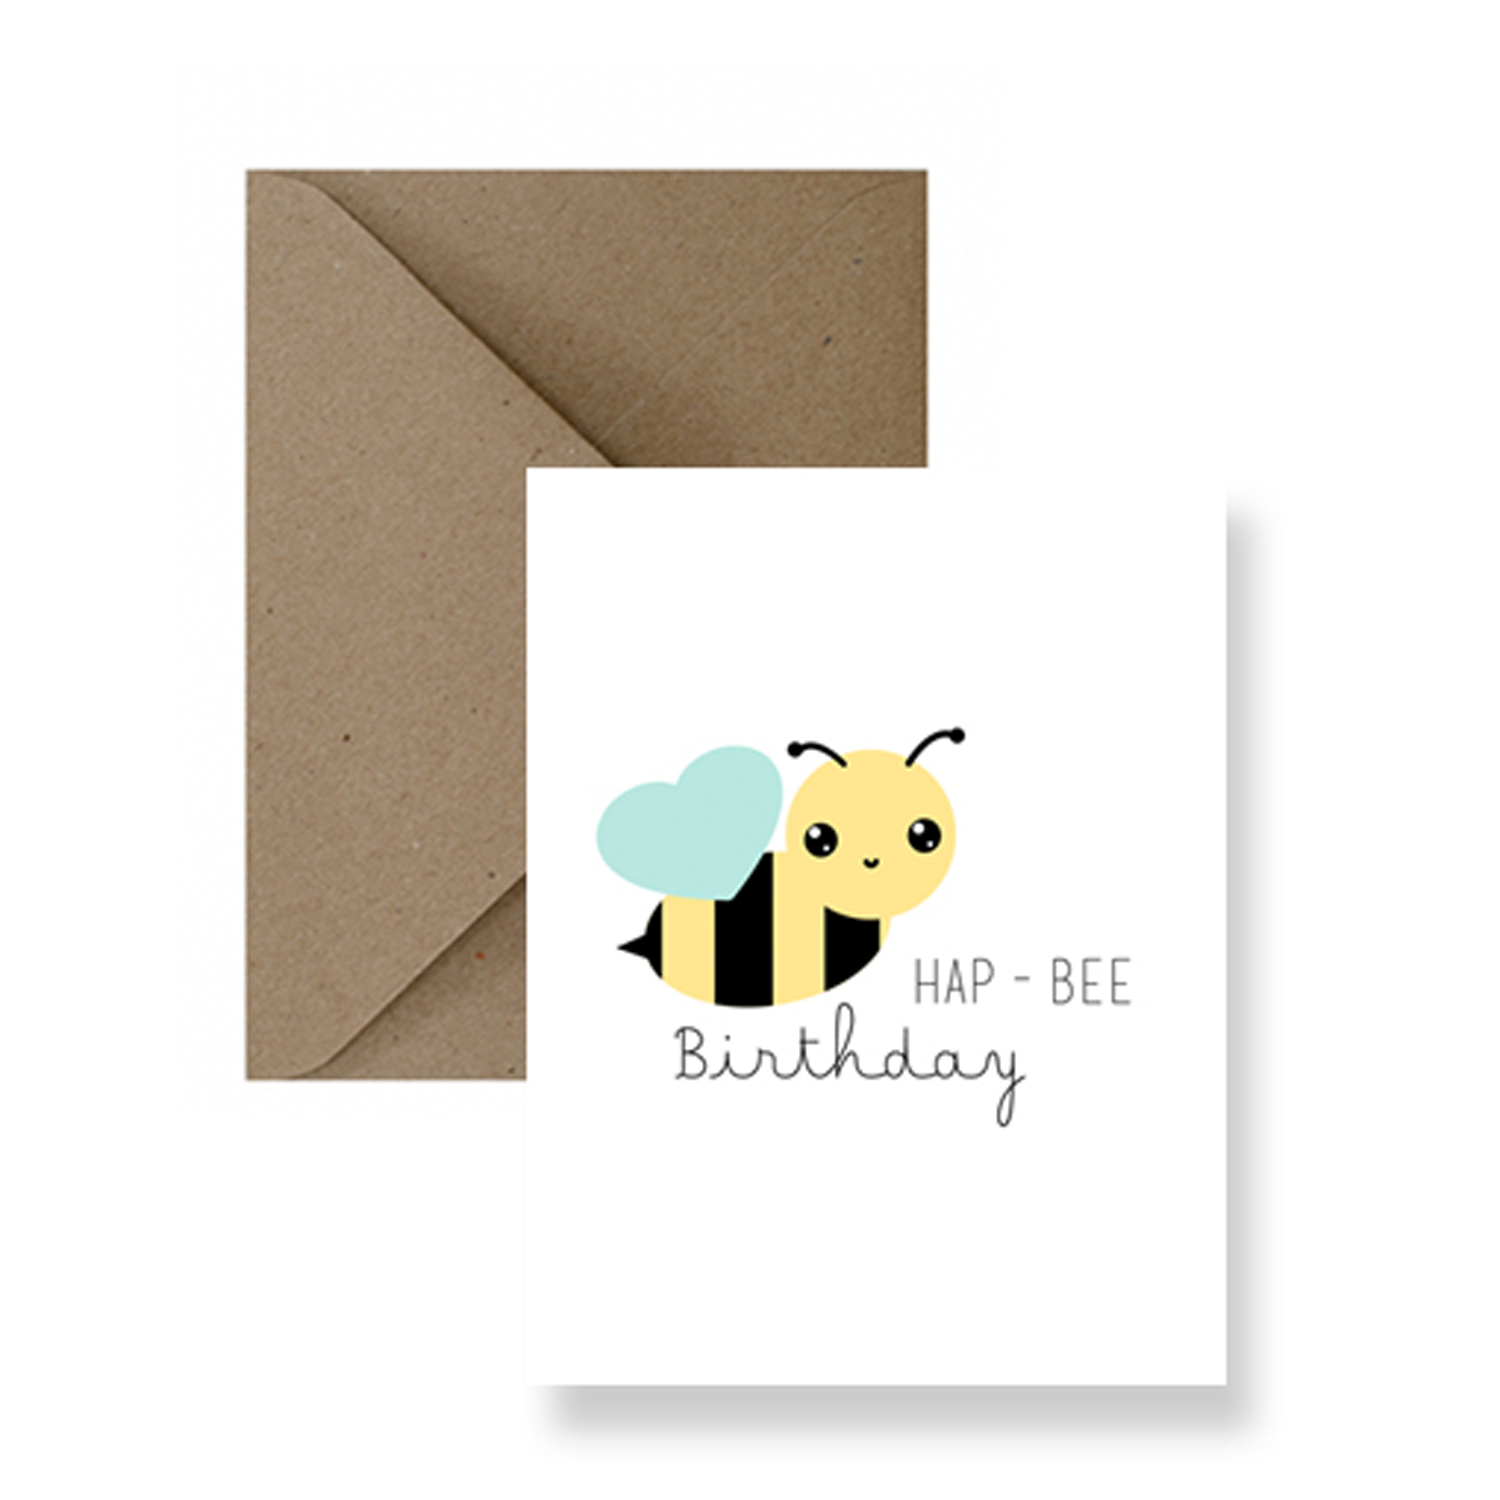 IMPAPER: Hap-Bee Birthday Product Image 1 of 4